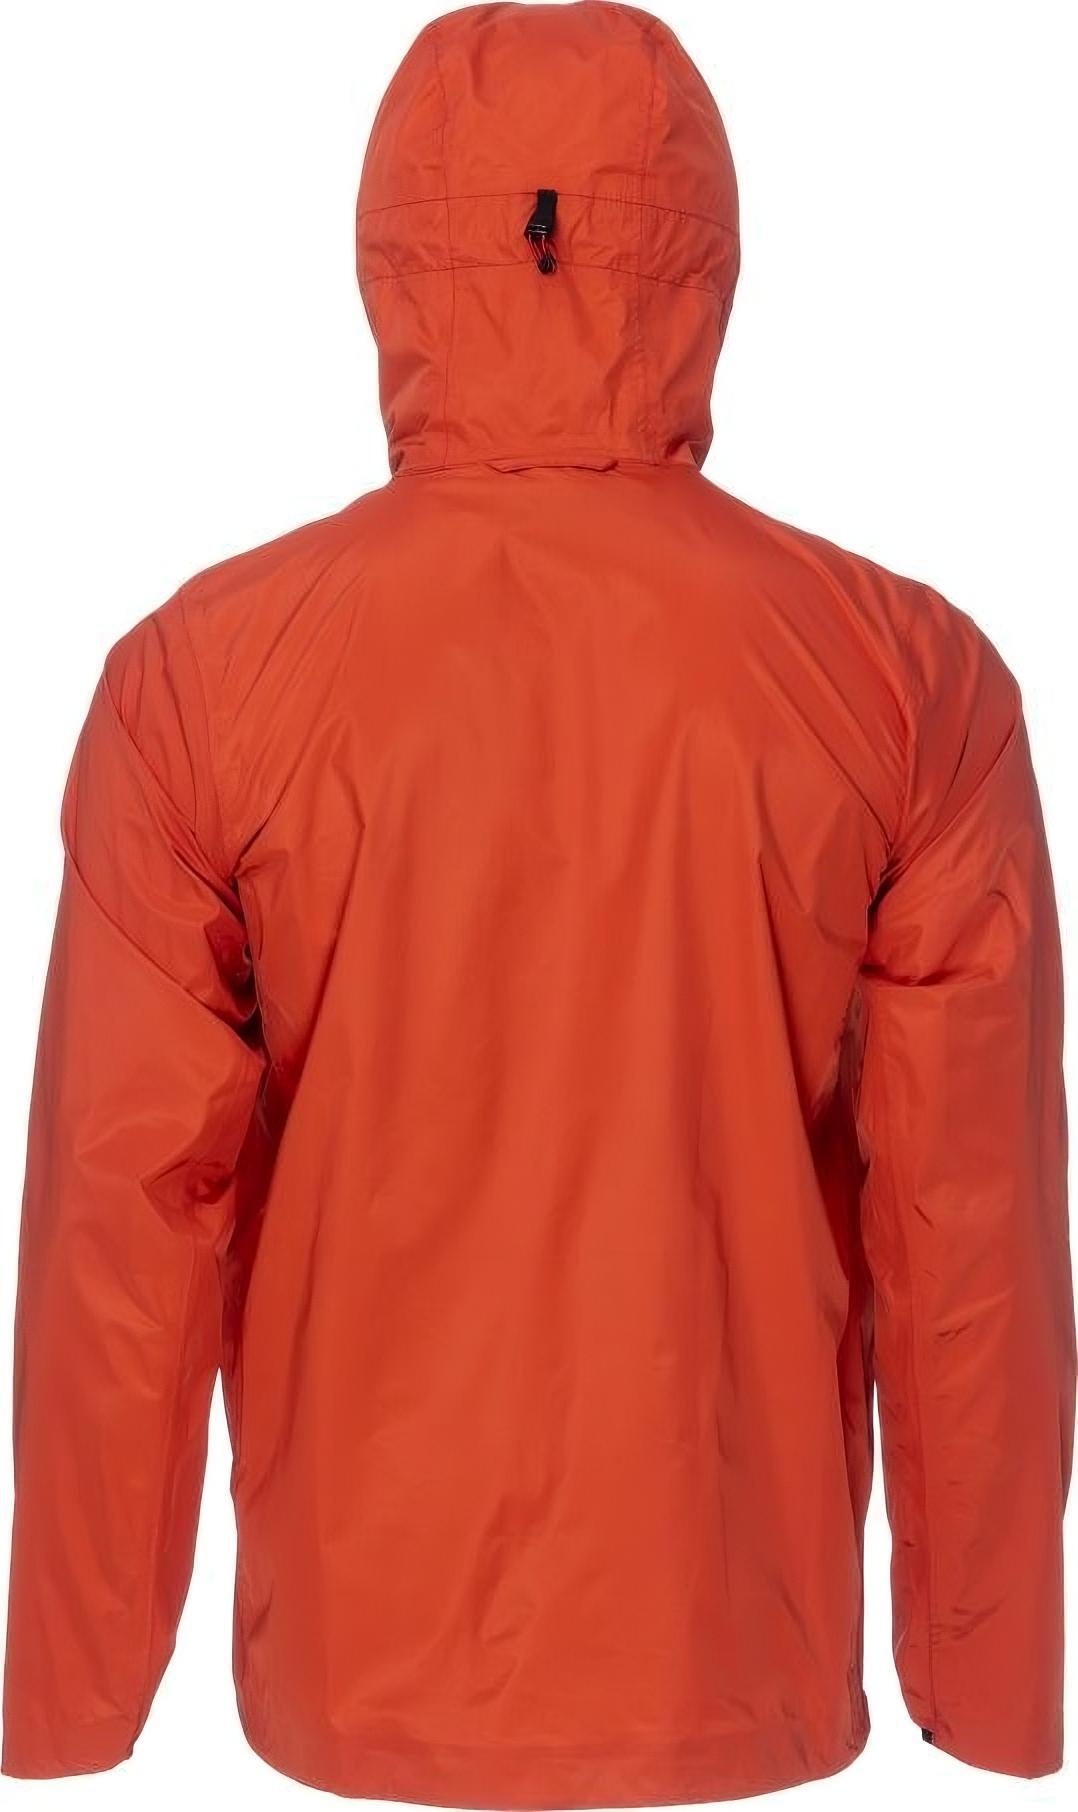 Куртка мужская Turbat Isla Mns orange red S красный фото 4